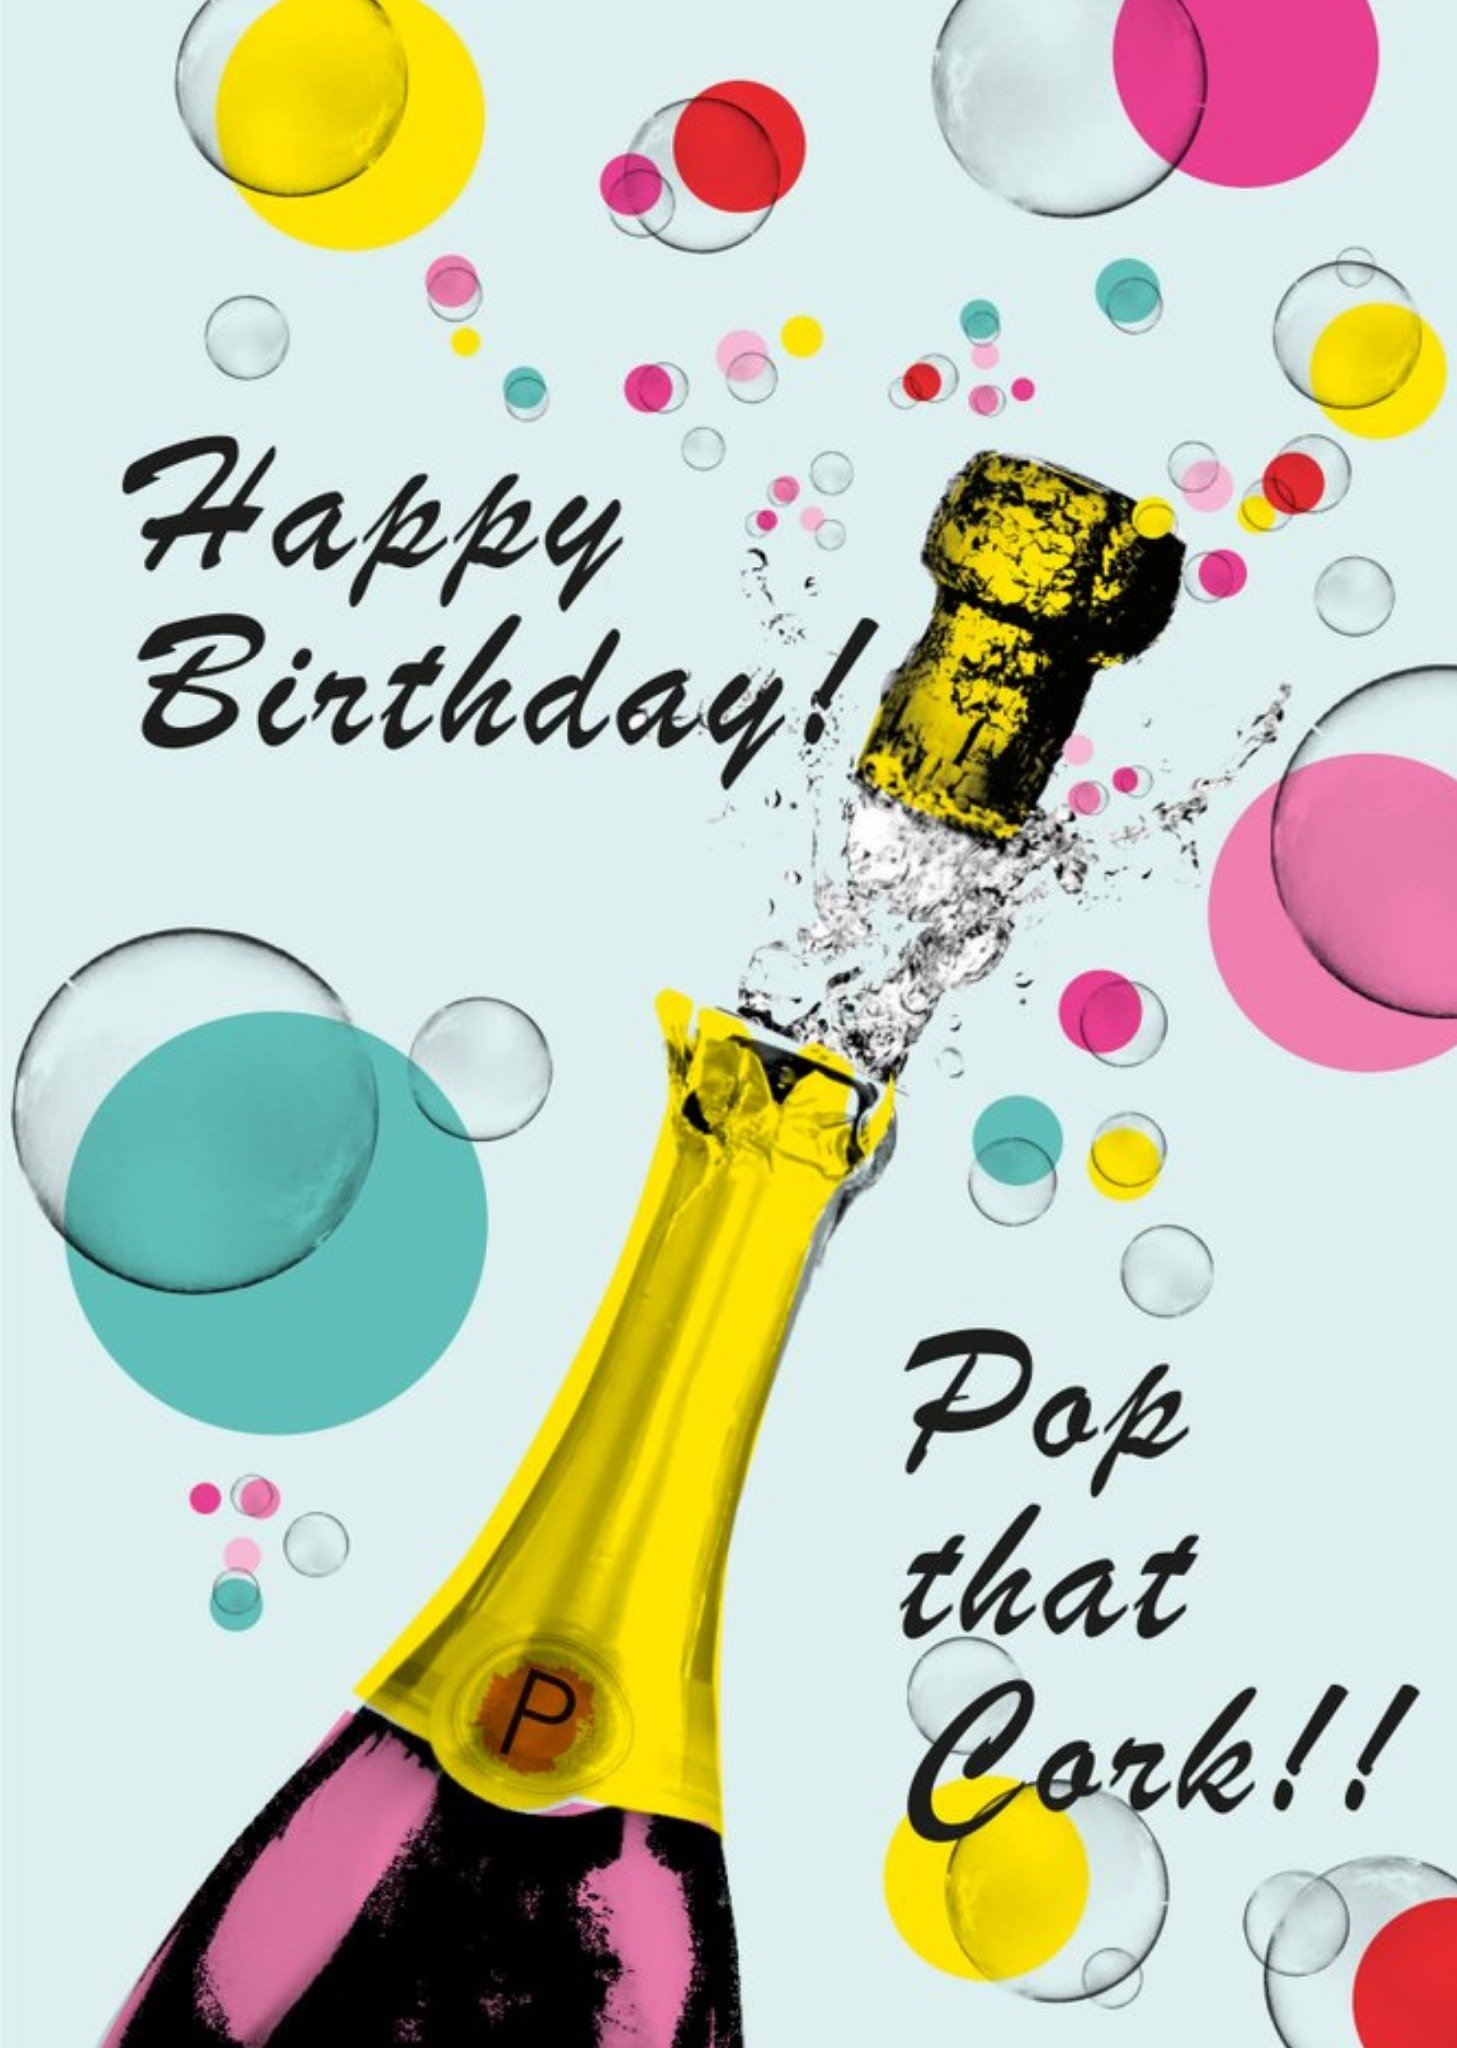 Moonpig Champagne Bottle Pop That Cork Birthday Card, Large